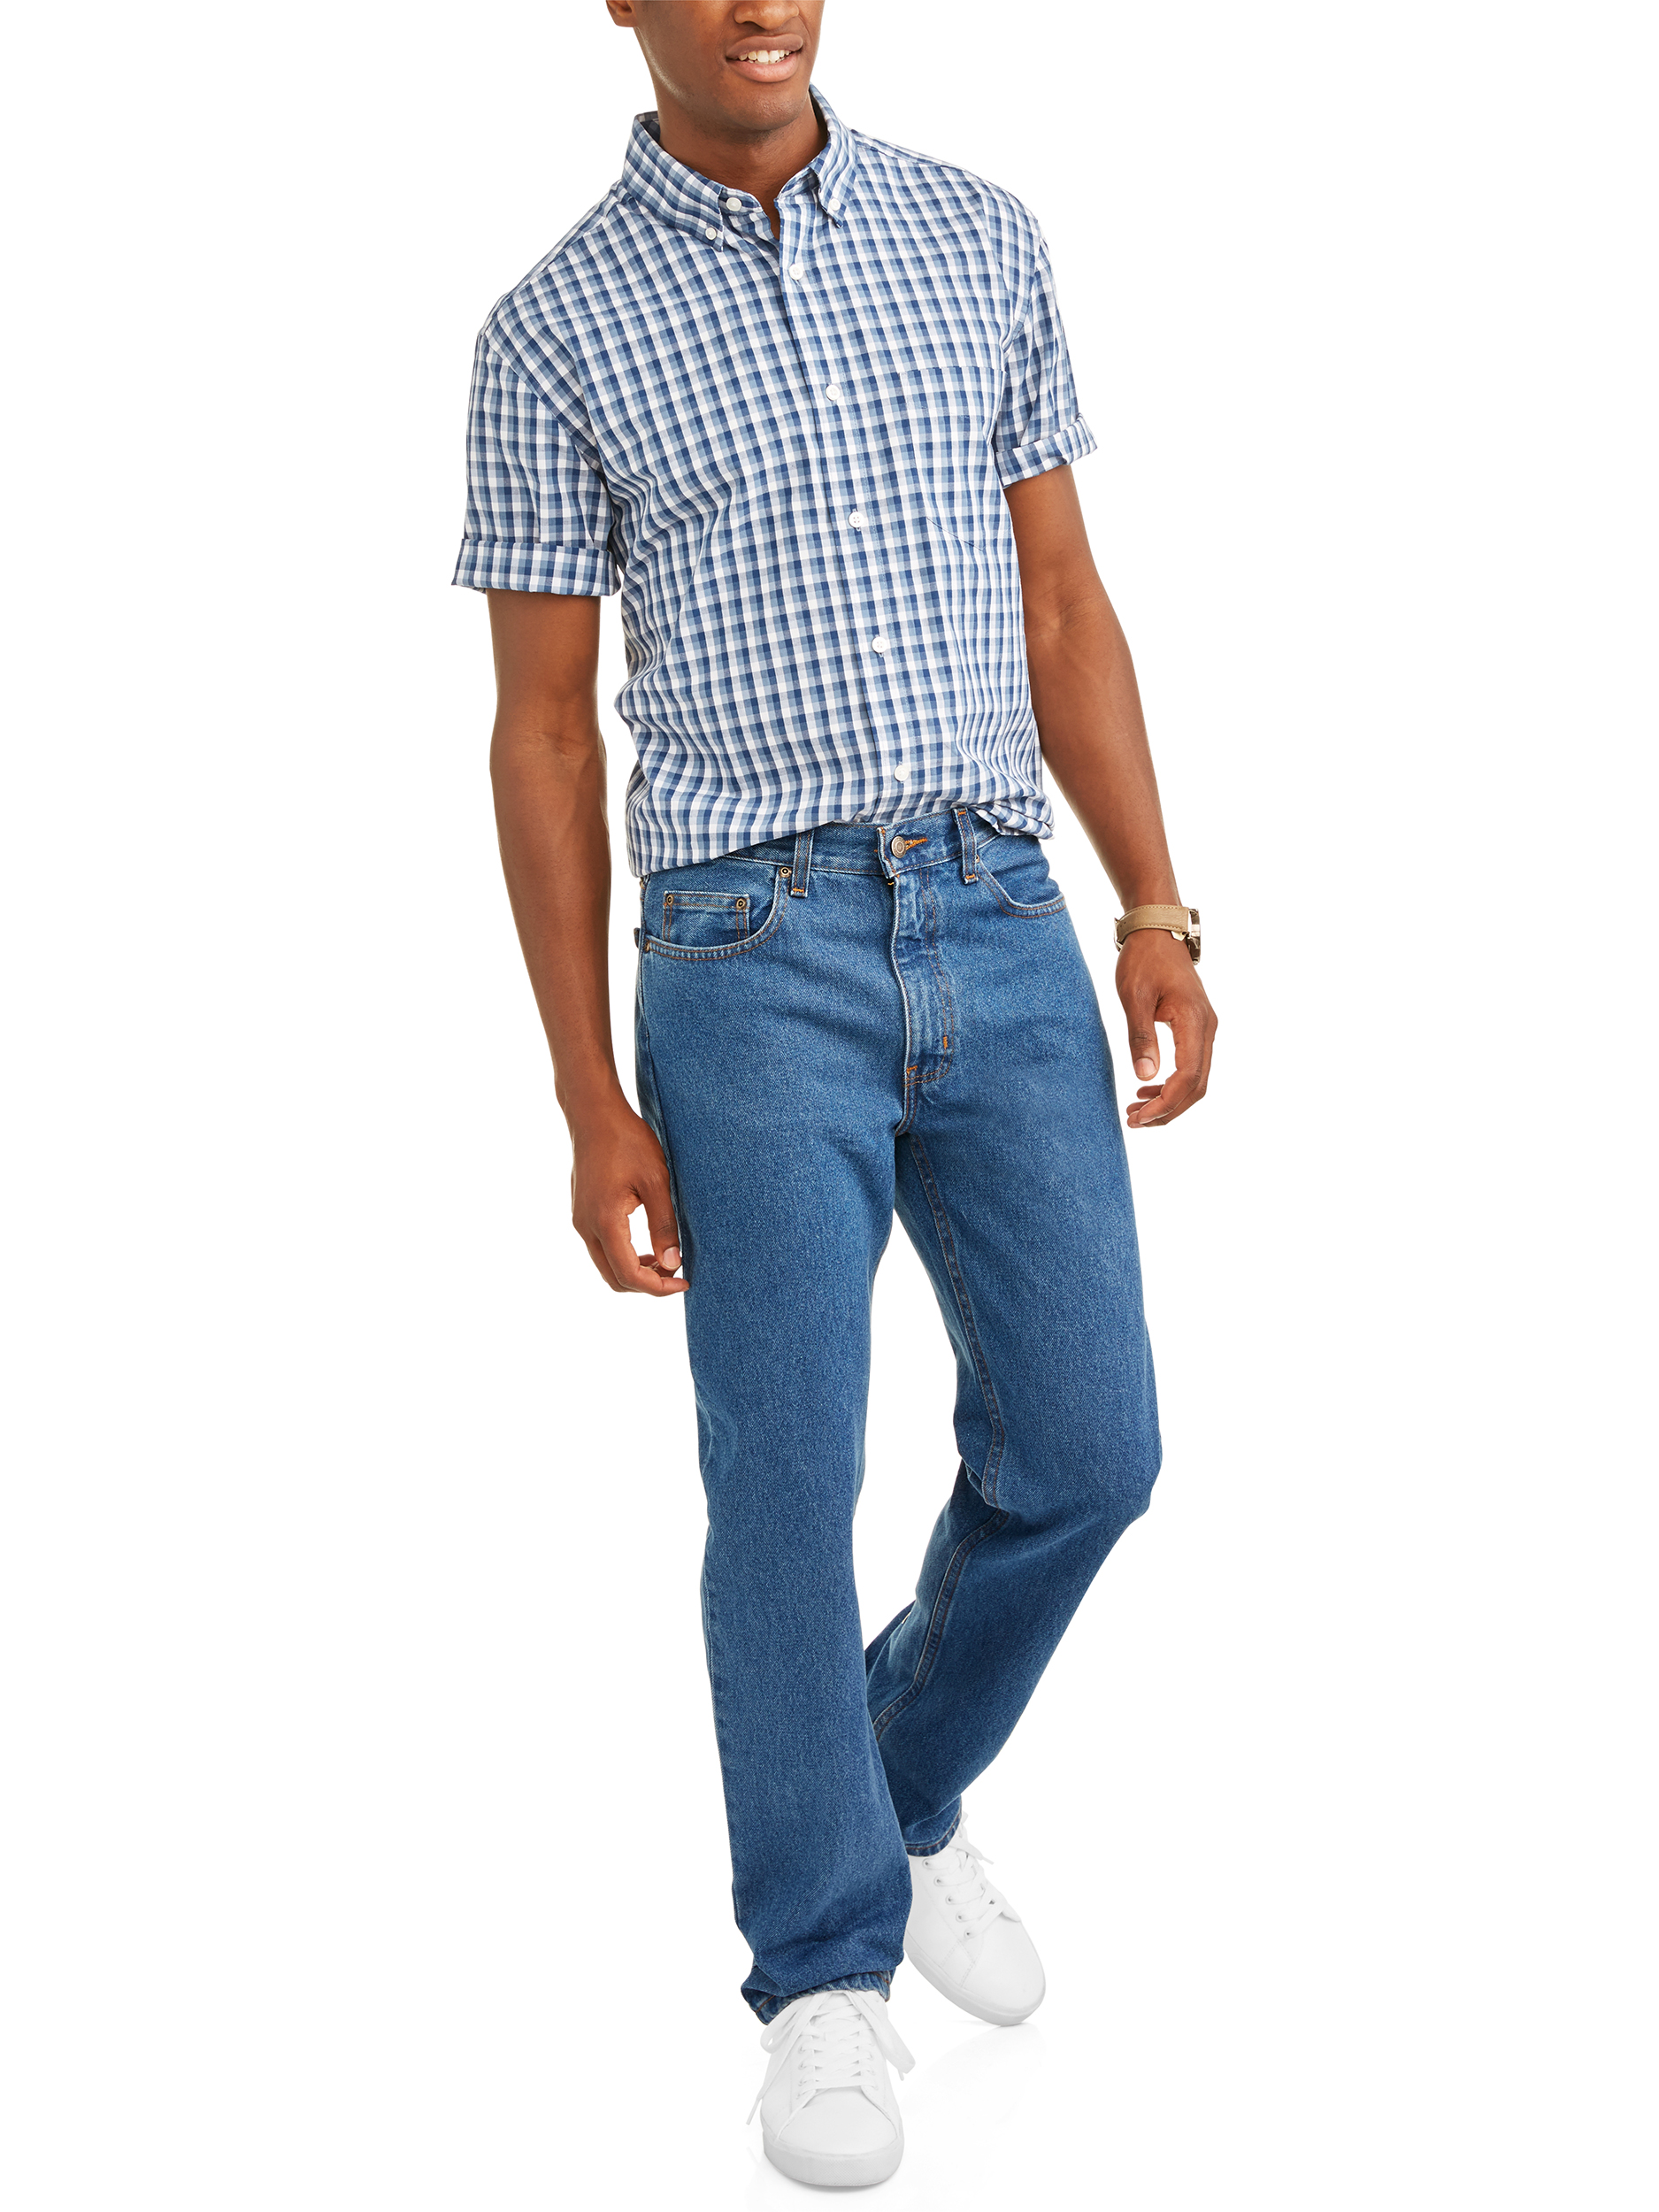 George Men's and Big Men's 100% Cotton Regular Fit Jeans - image 7 of 9